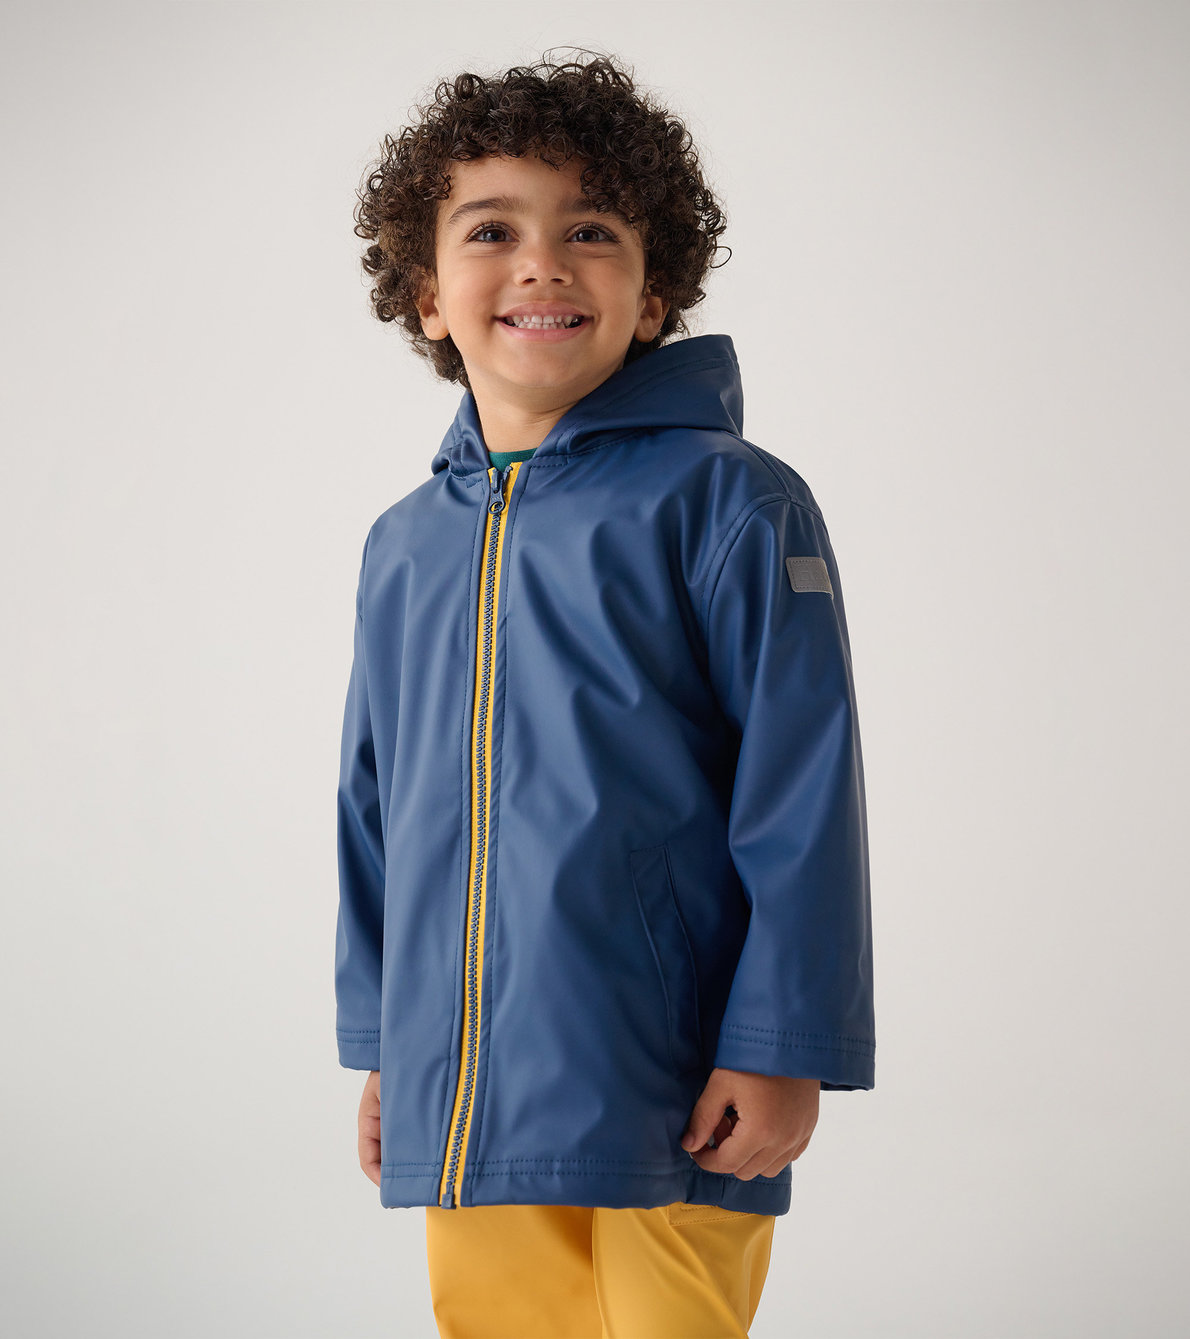 View larger image of Kids Navy Zip-Up Raincoat